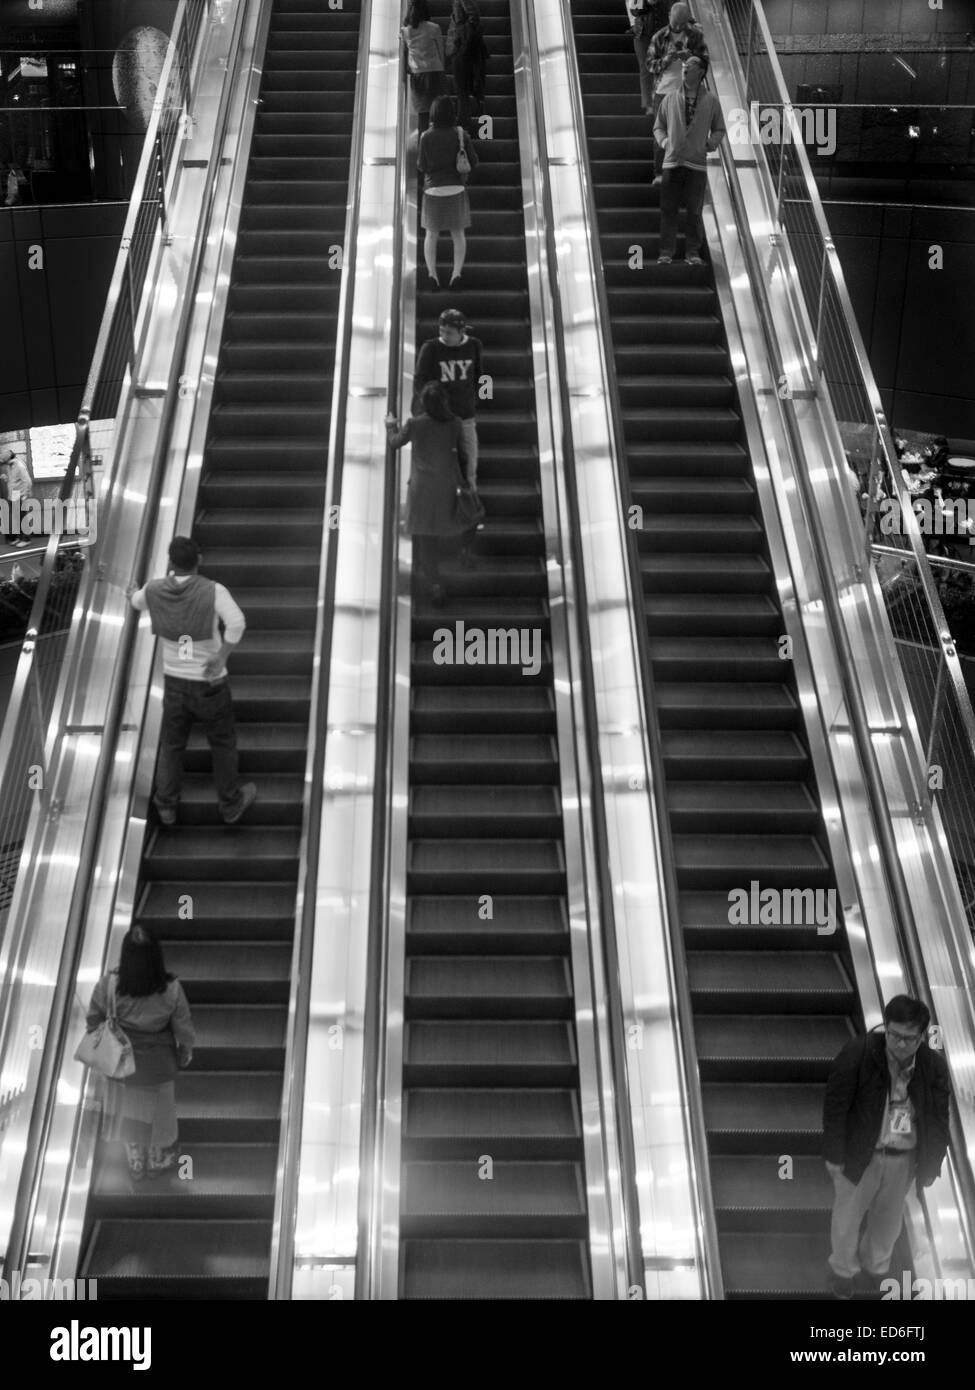 People in an escalator at night Stock Photo